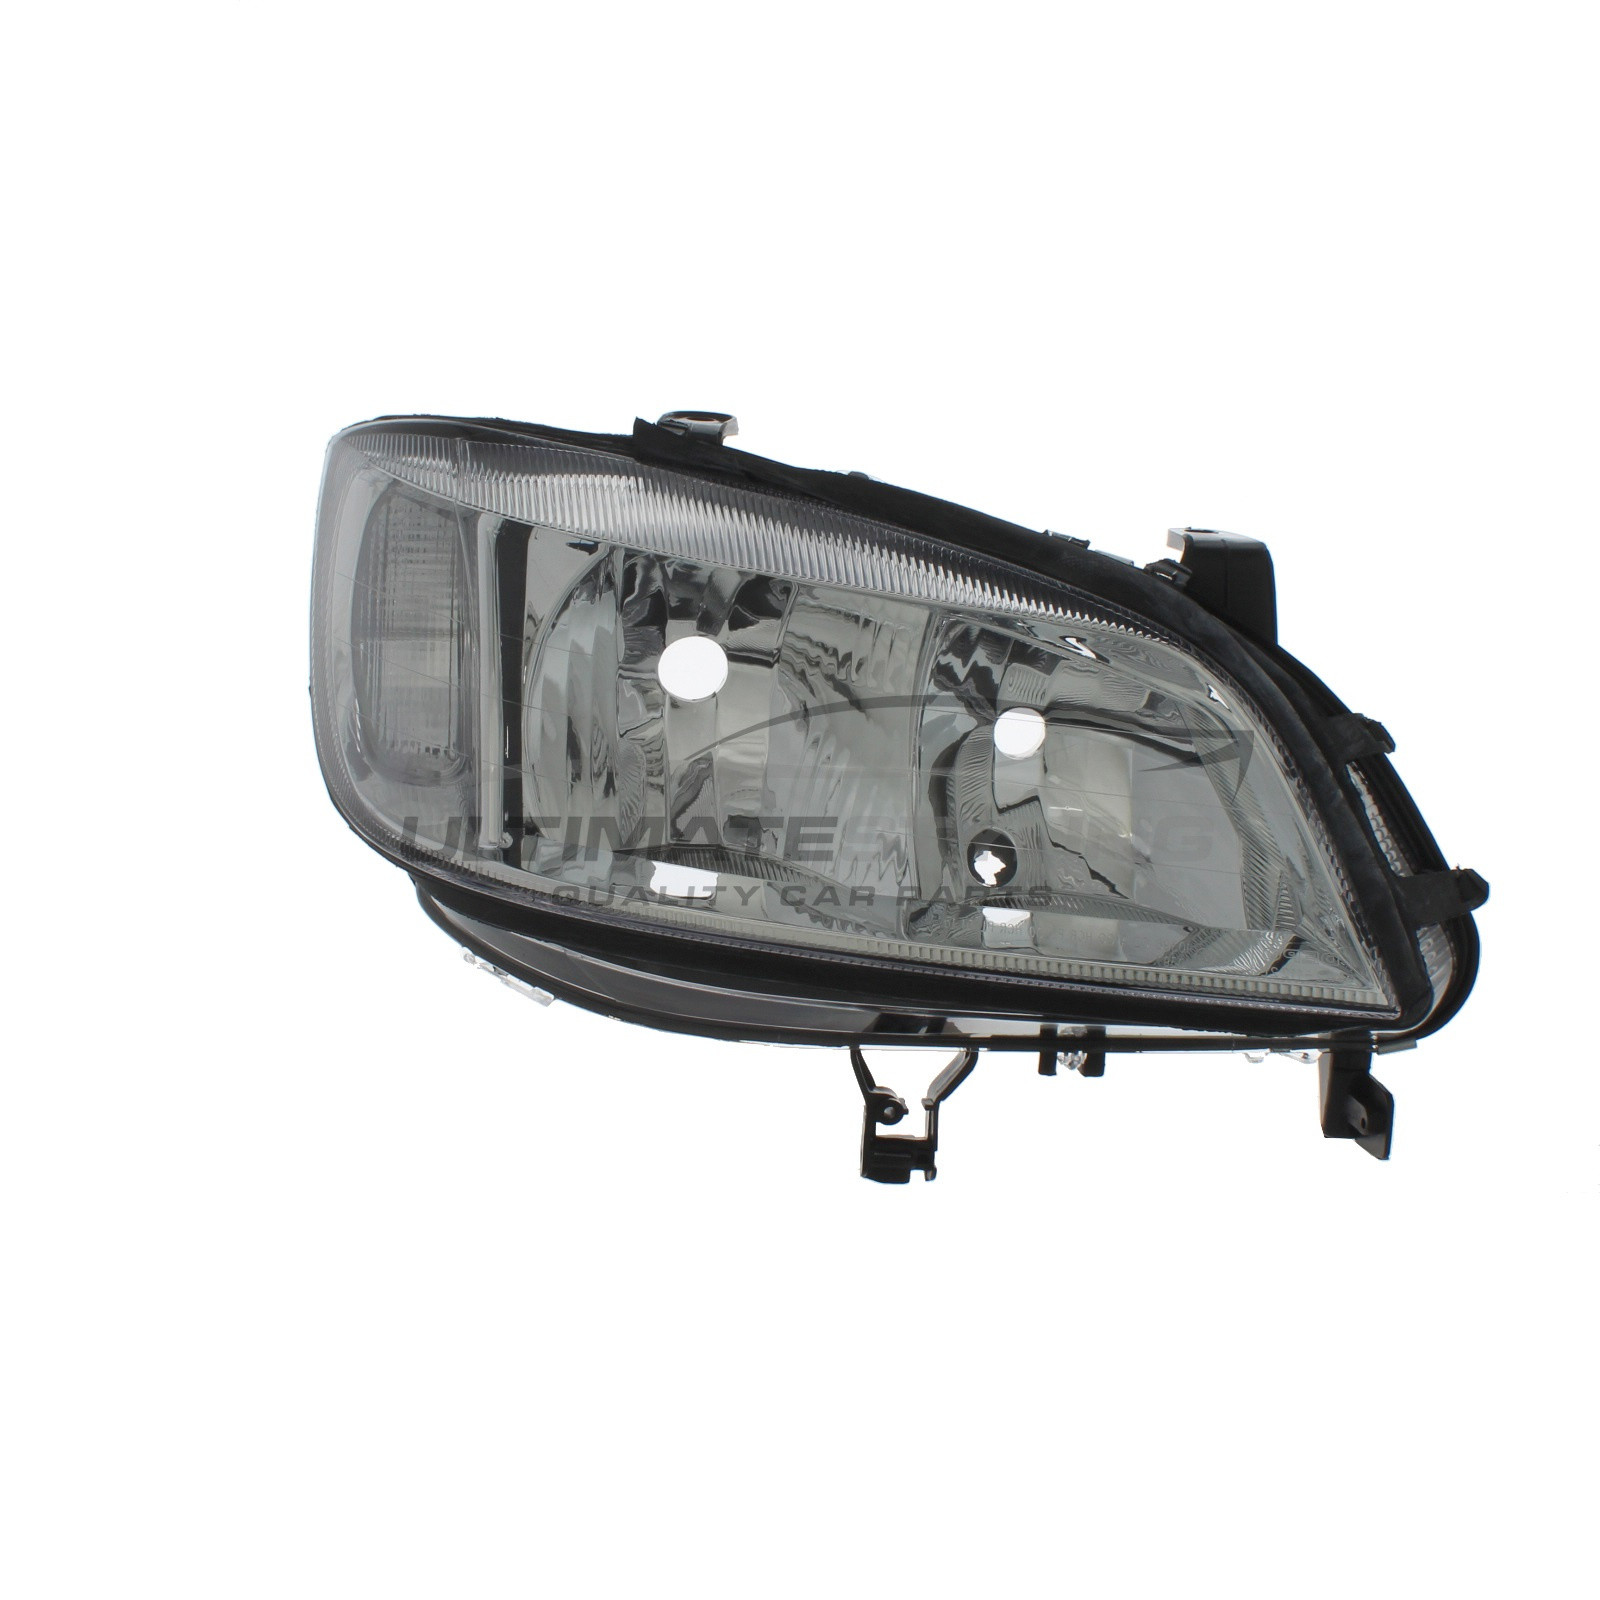 Headlight / Headlamp for Vauxhall Zafira